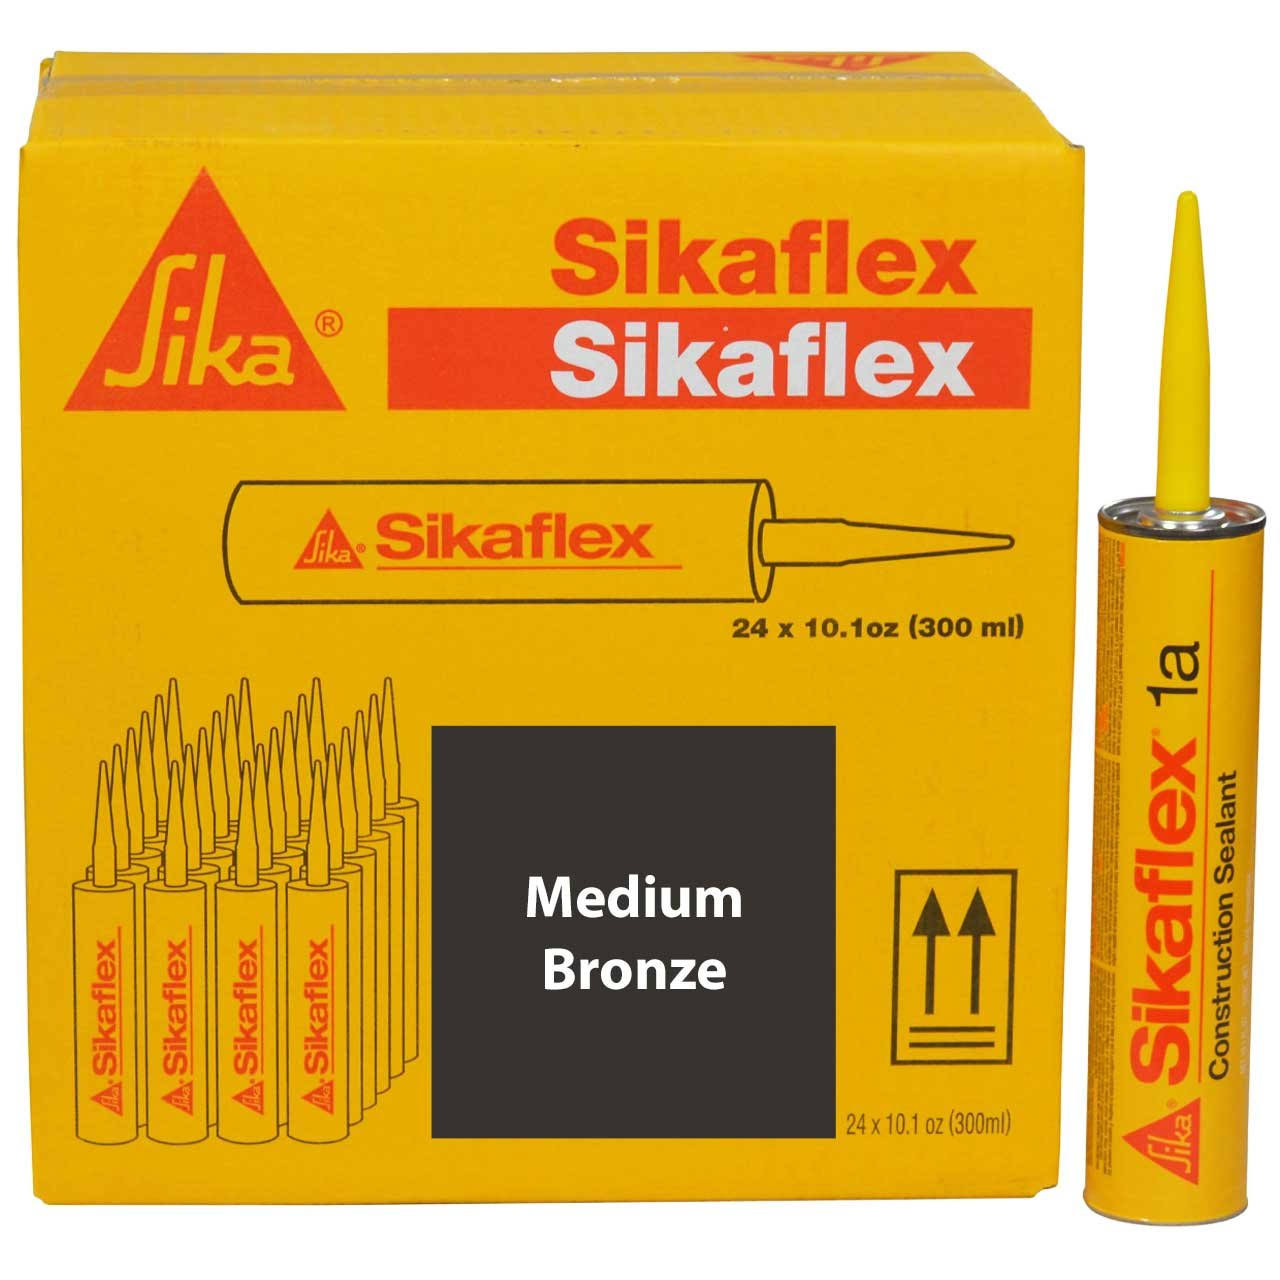 Sikaflex 1A Polyurethane Premium Grade High Performance Elastomeric Sealant, 10.3 fl oz Capacity,Medium Bronze , 12 Tubes